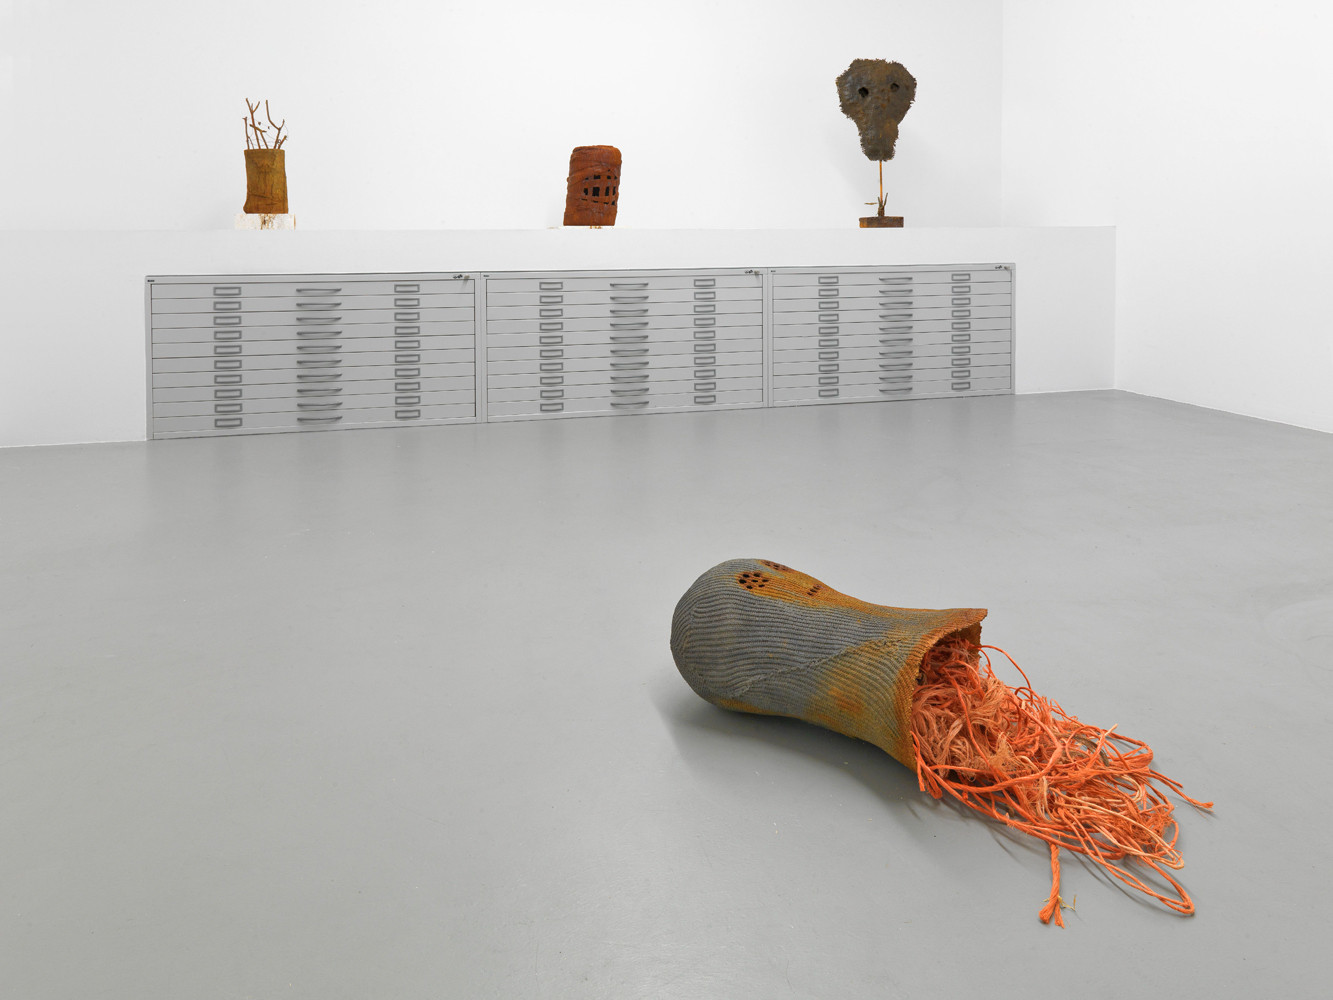 Des Hughes, ‘Rust never sleeps’, Installation view, 2013